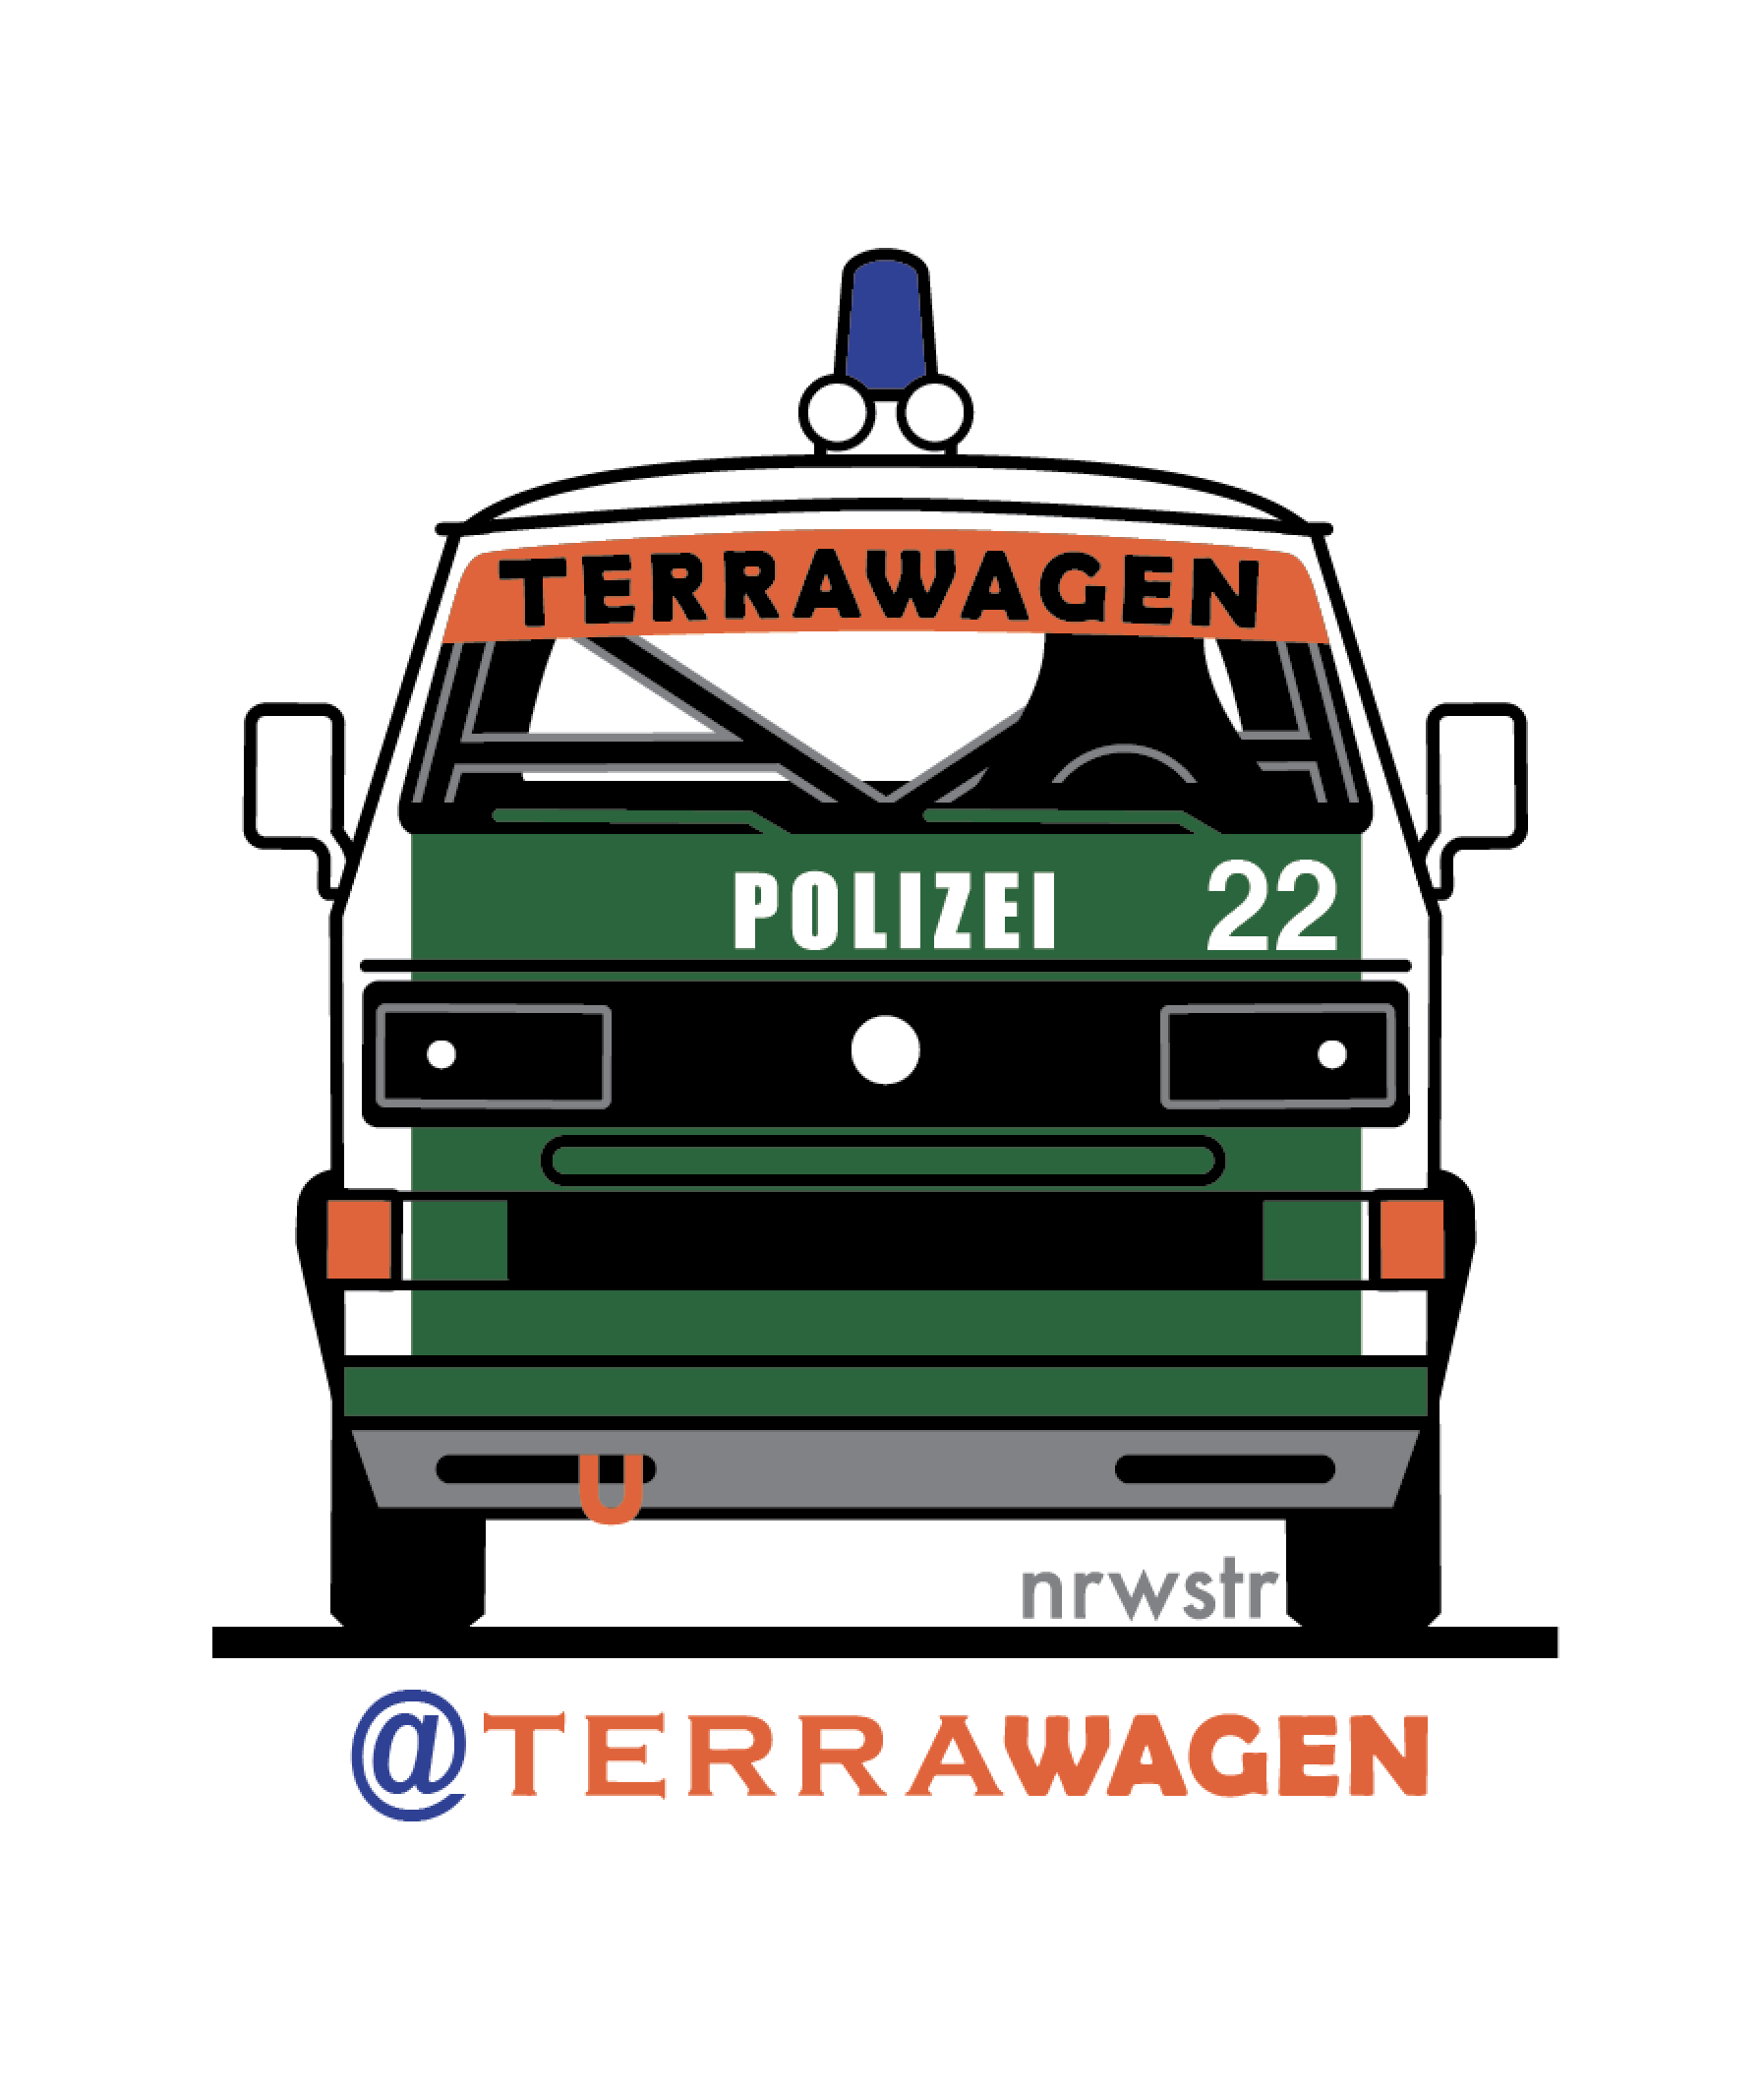 terrawagen polizei front view.png